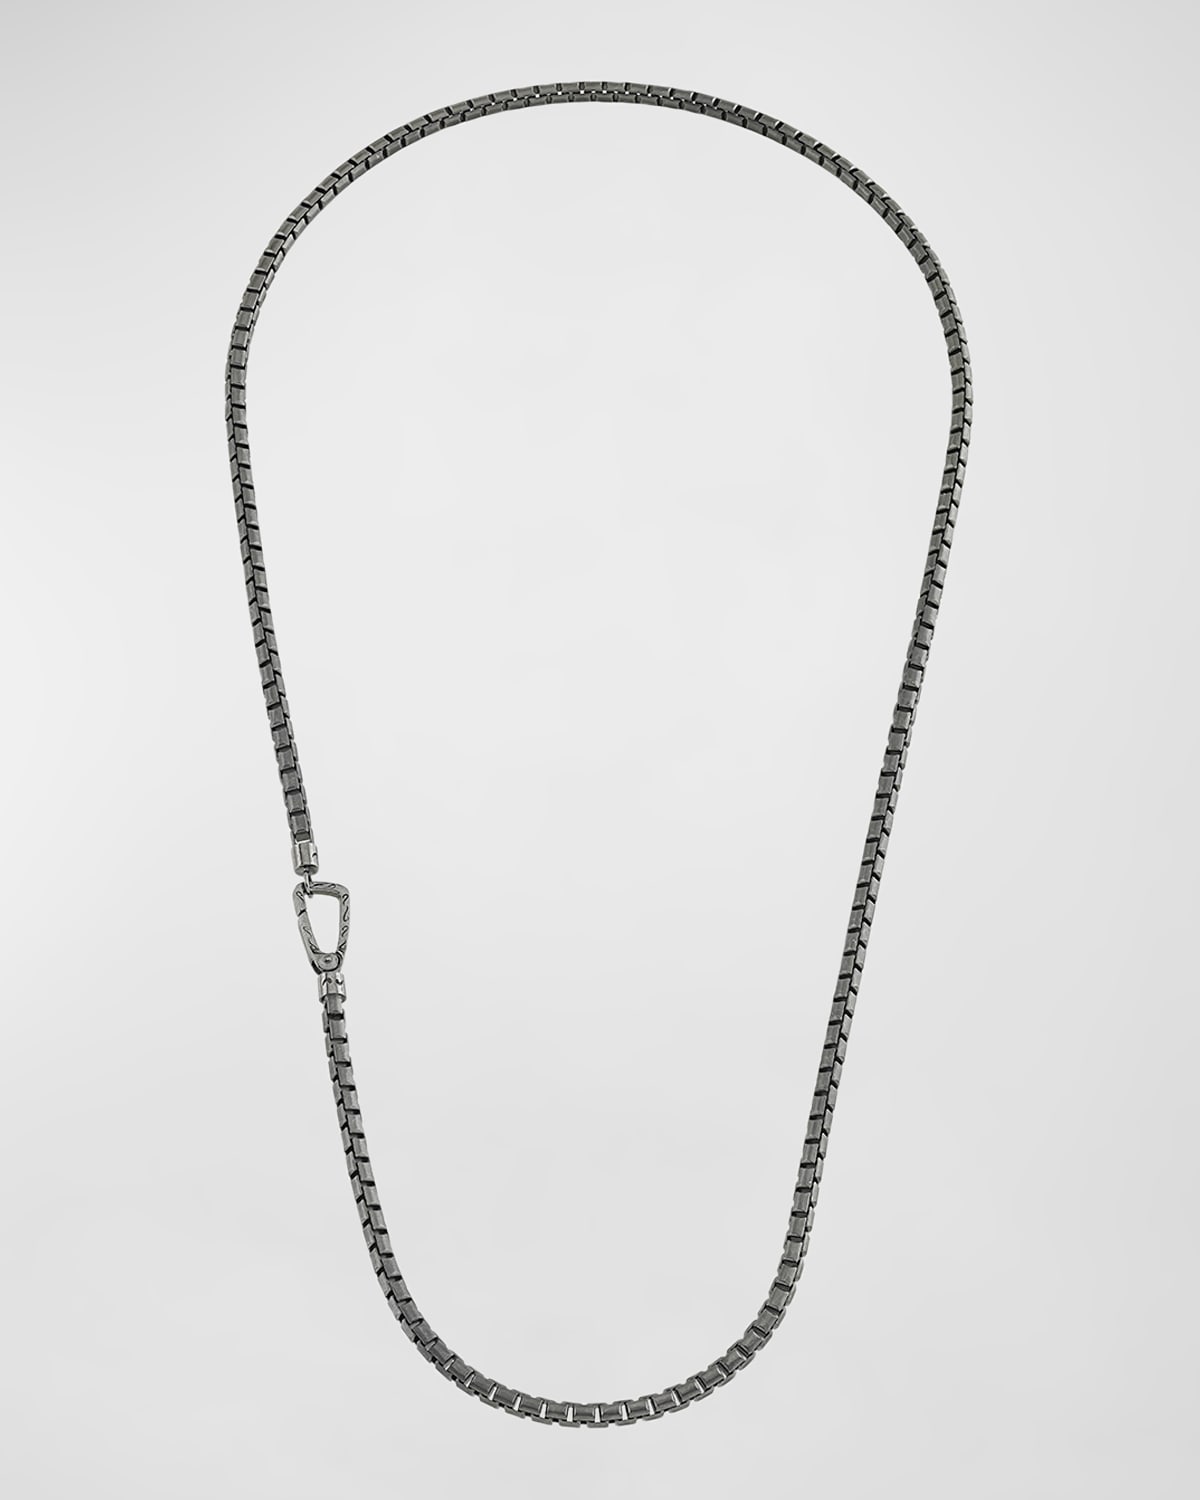 Marco Dal Maso Carved Tubular Oxidized Silver Necklace, 20"l